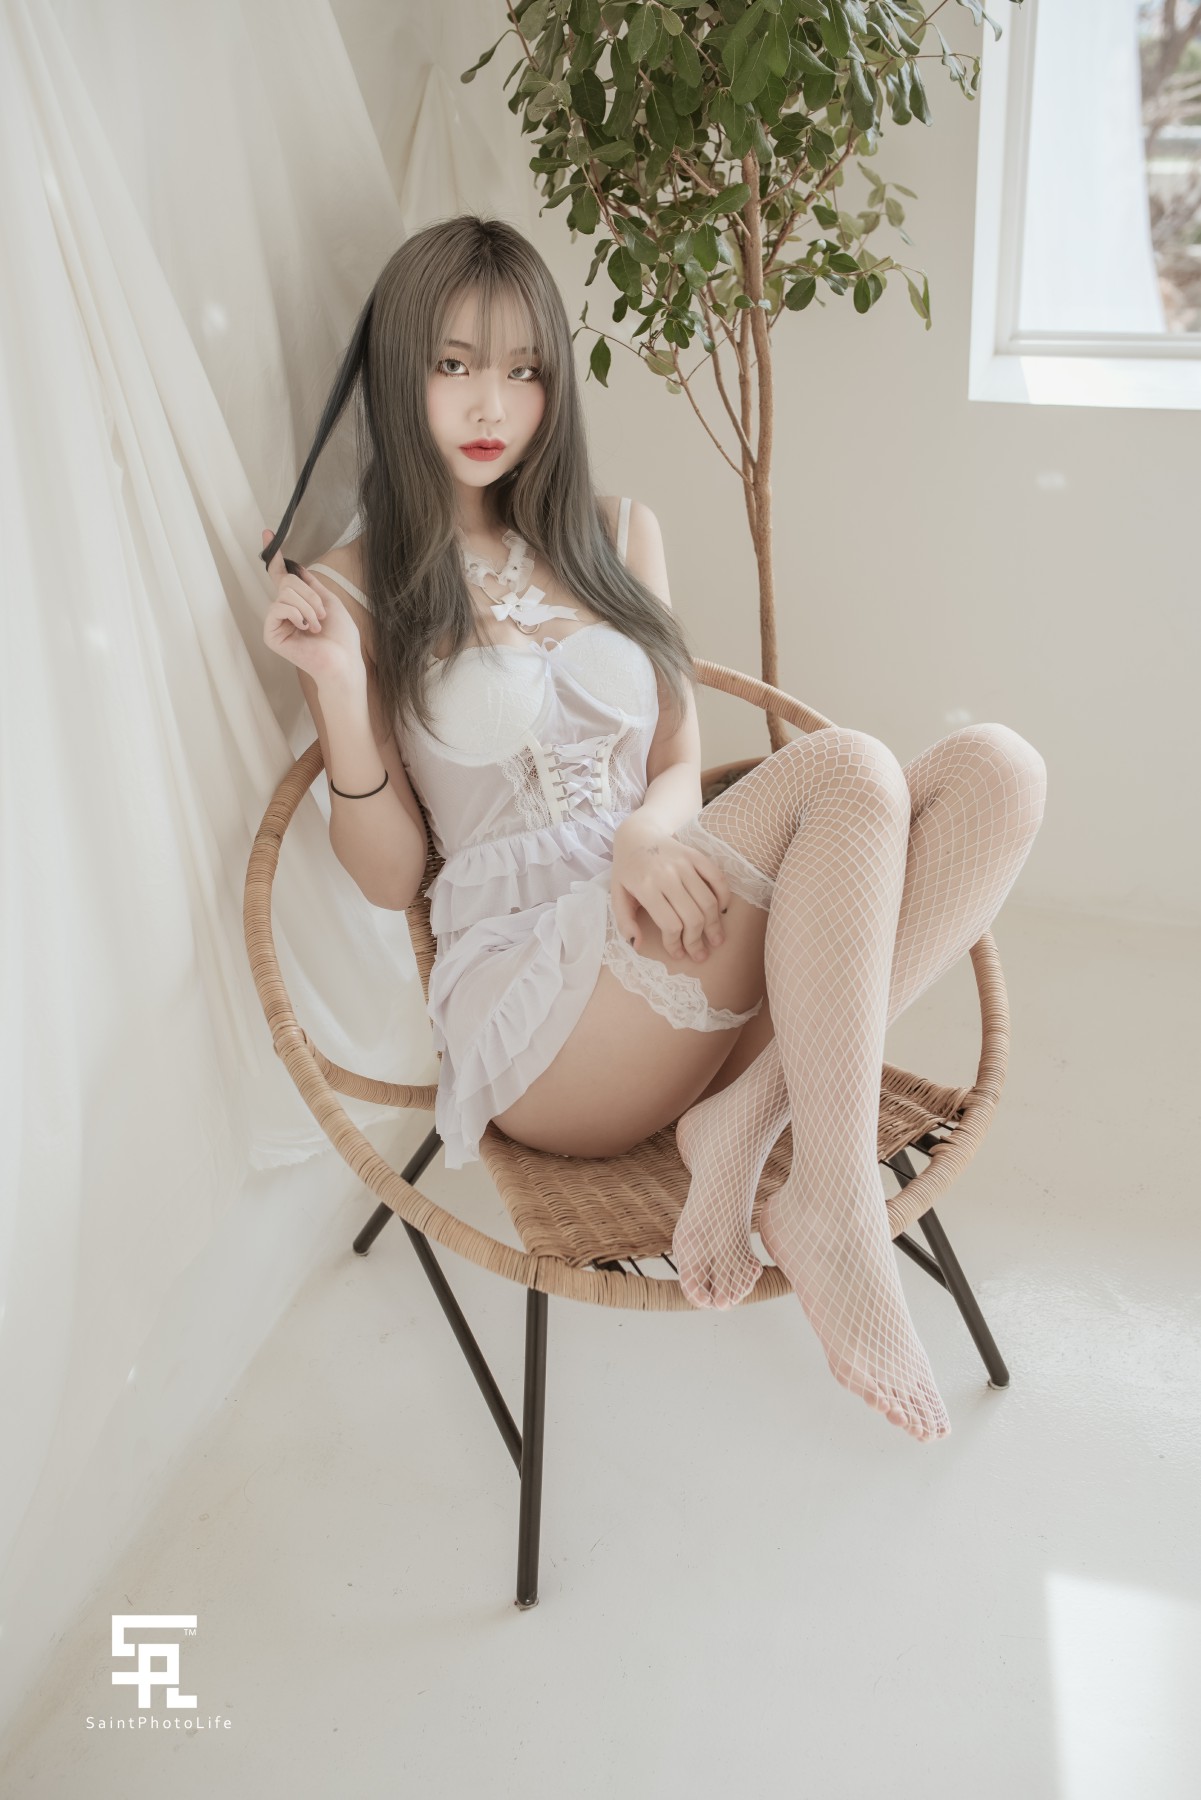 [SaintPhotoLife] Yuna - Growing Up